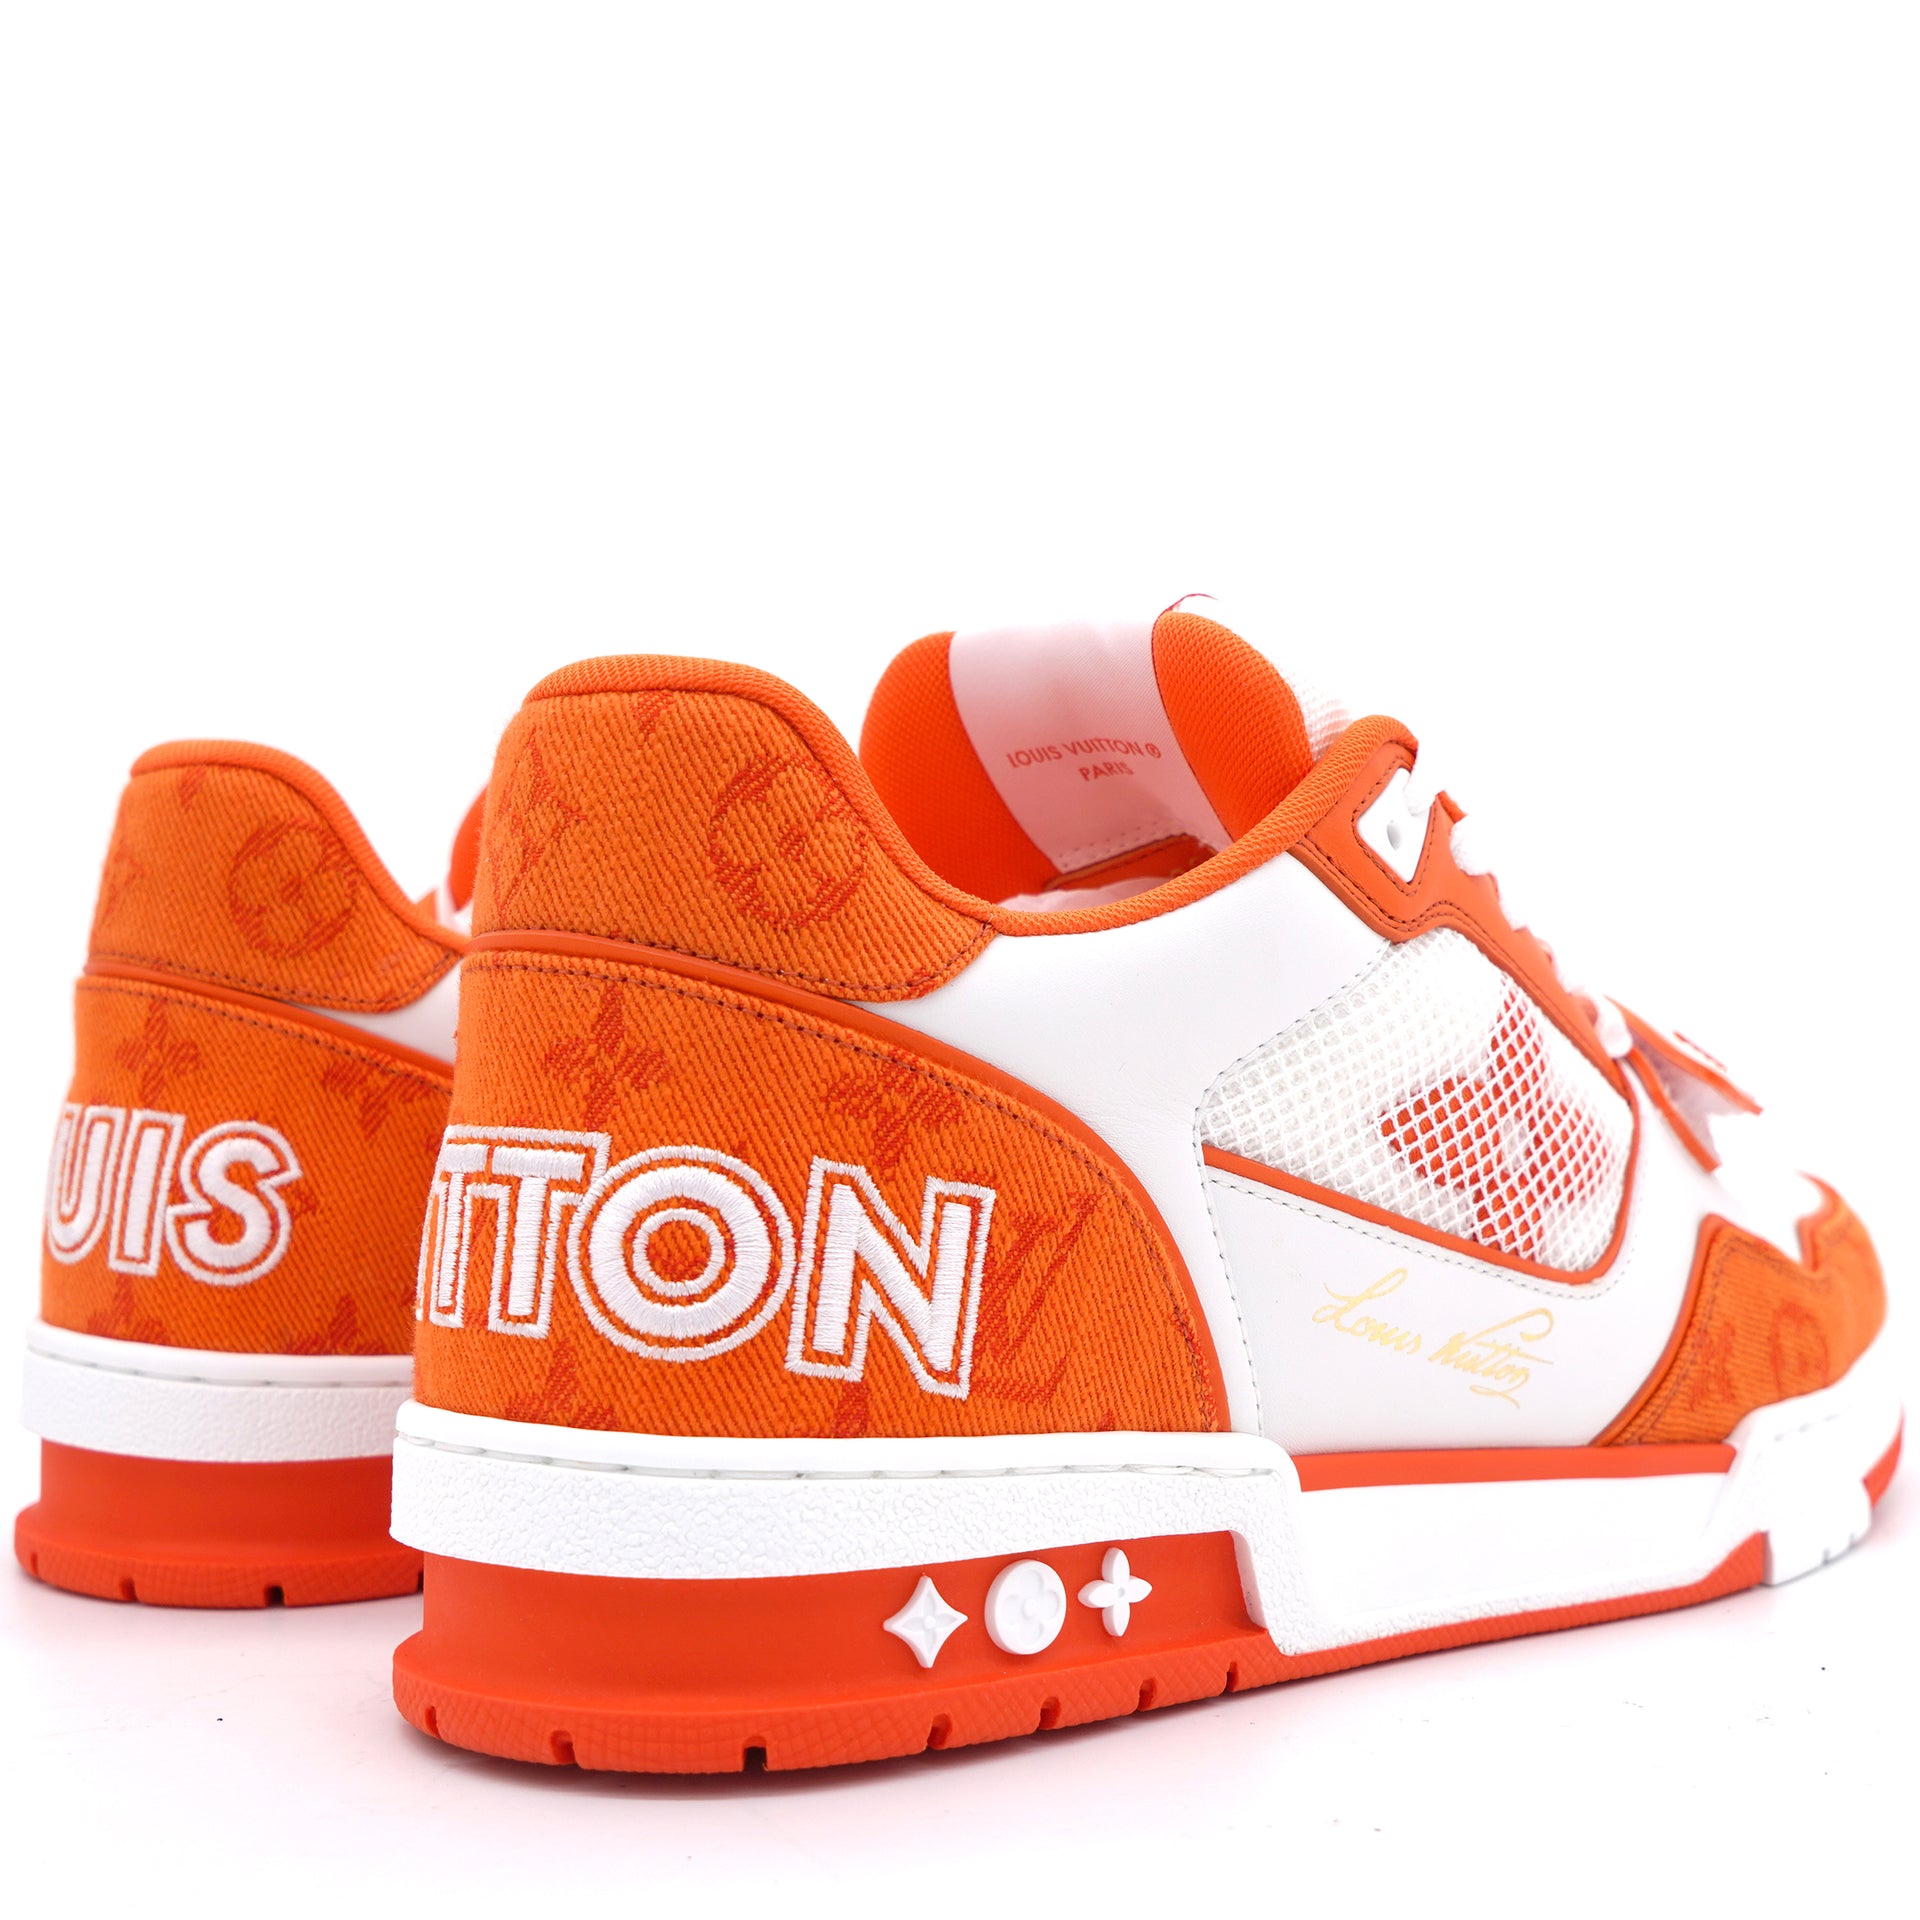 LOUIS VUITTON Trainer Sneaker Orange Size 8.5